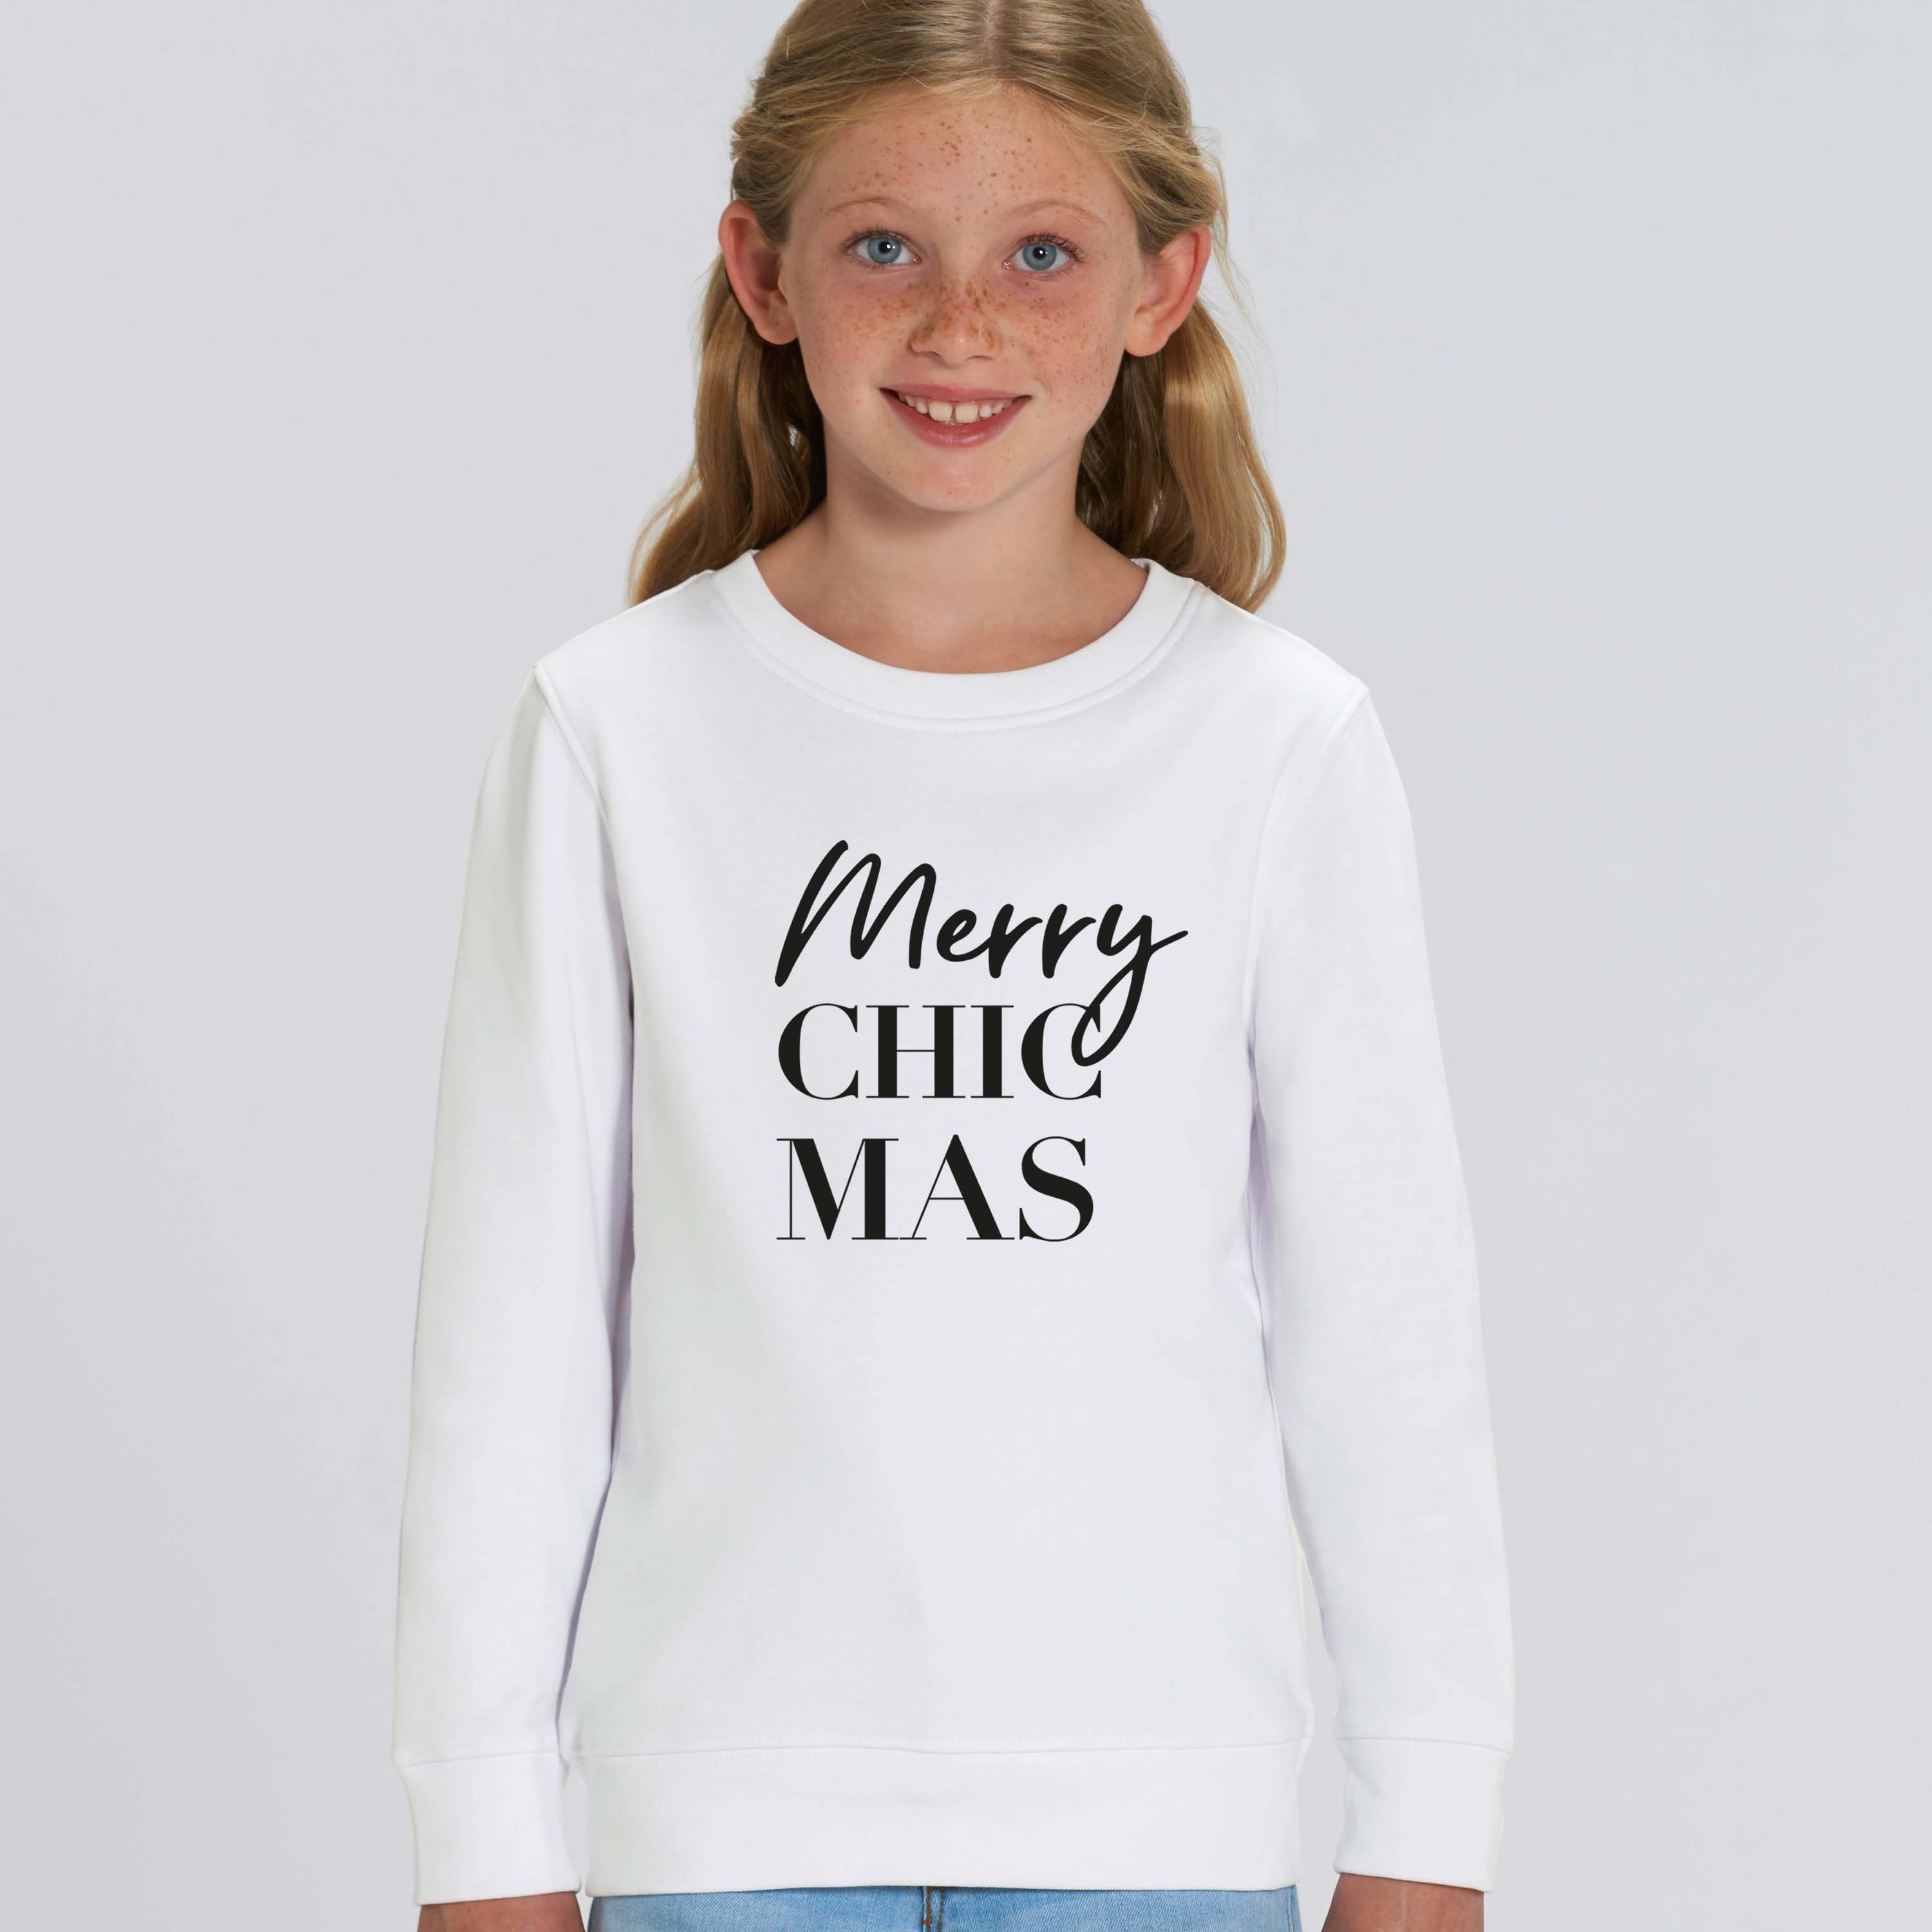 XMAS Kids Sweatshirt - Merry chicmas